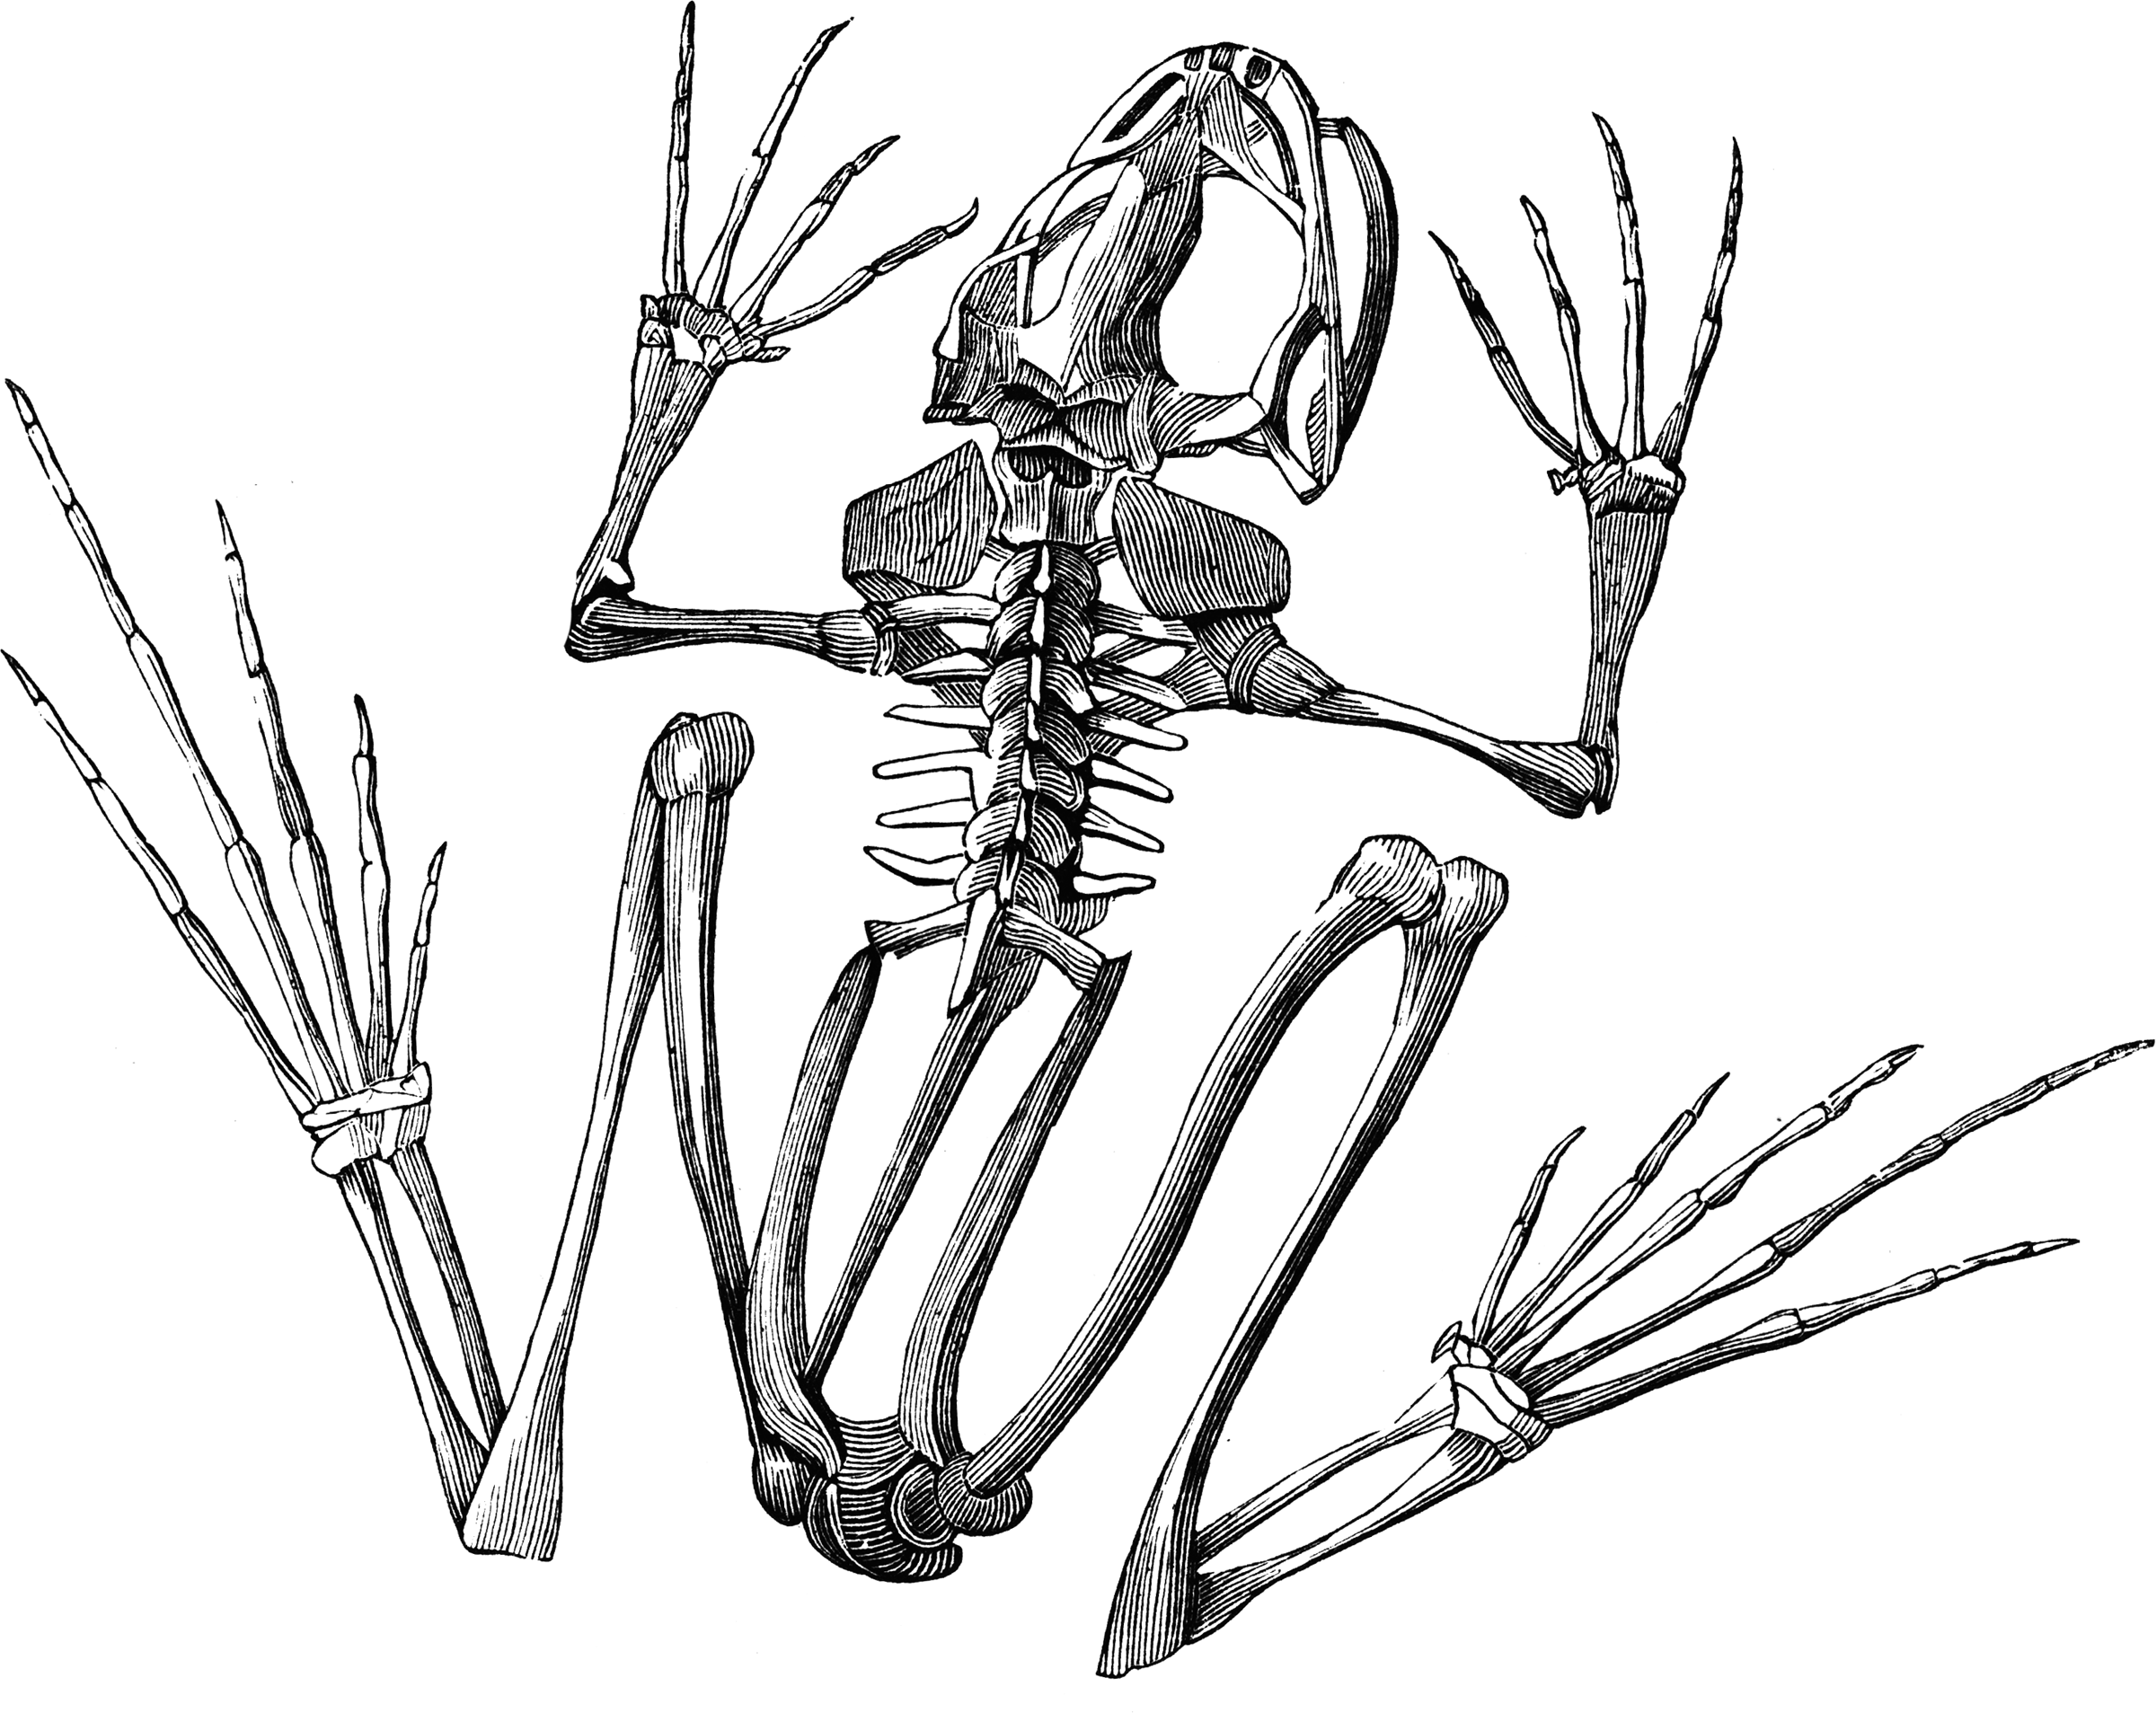 Frog skeleton | ClipArt ETC